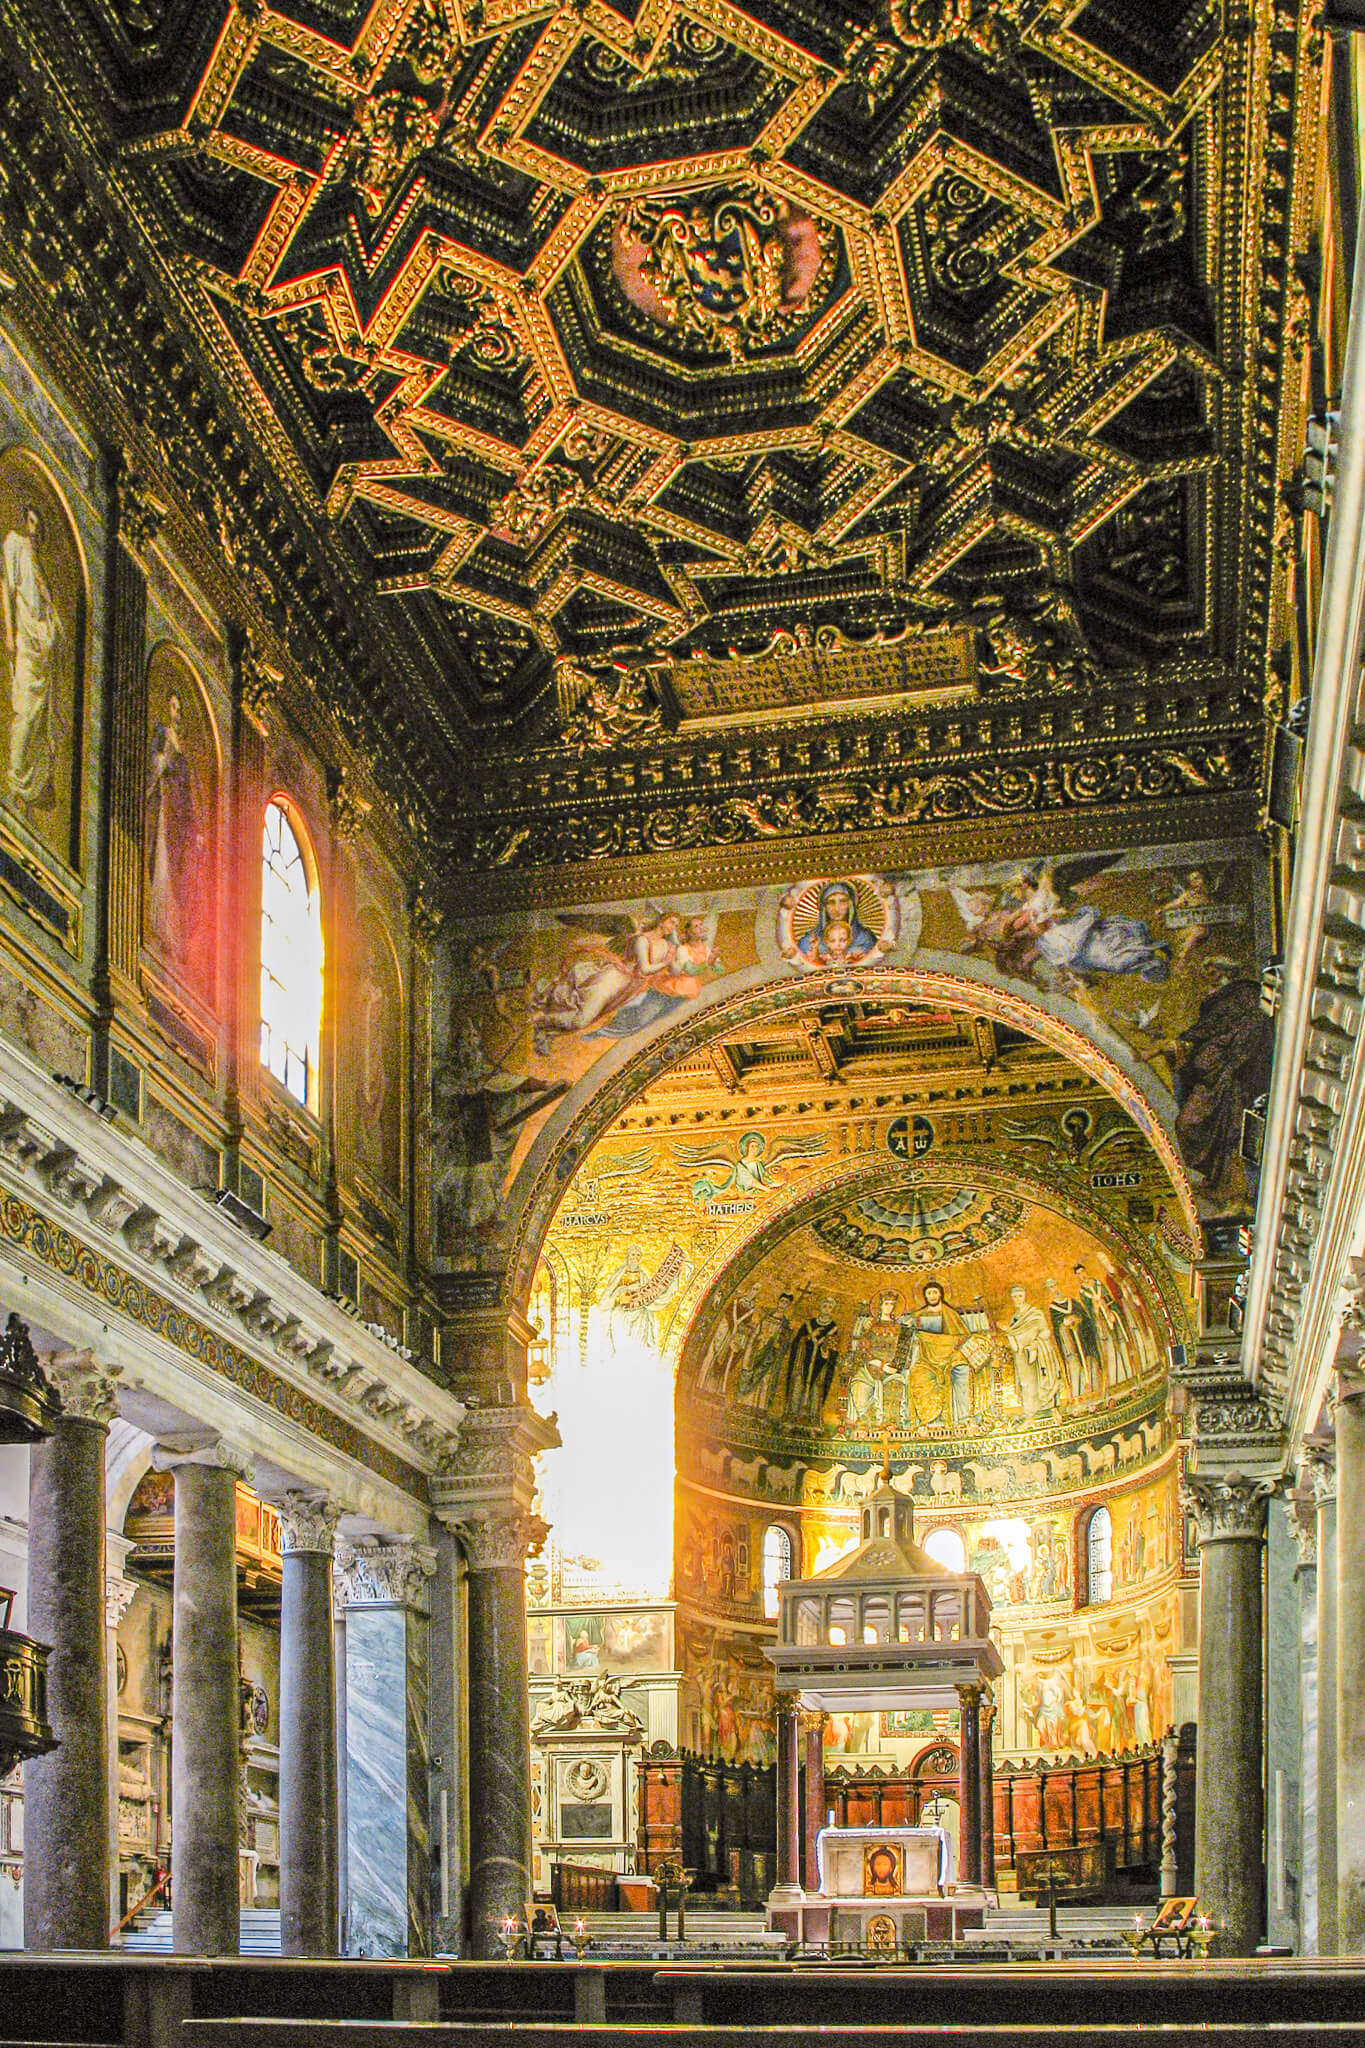 The golden mosaic interior interior of Santa Maria in Trastevere